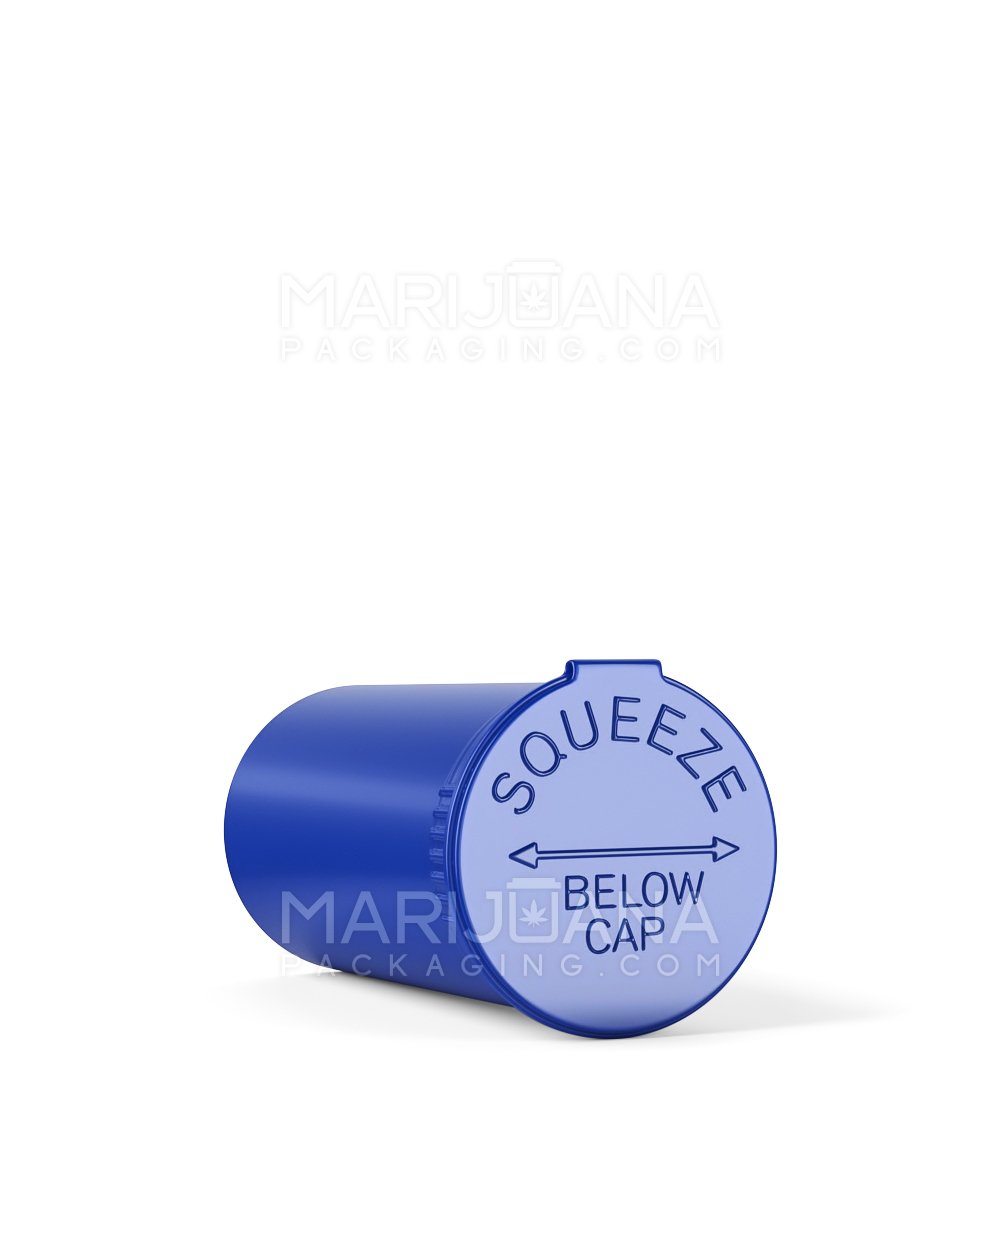 Child Resistant | Opaque Blueberry Pop Top Bottles | 13dr - 2g - 315 Count - 3